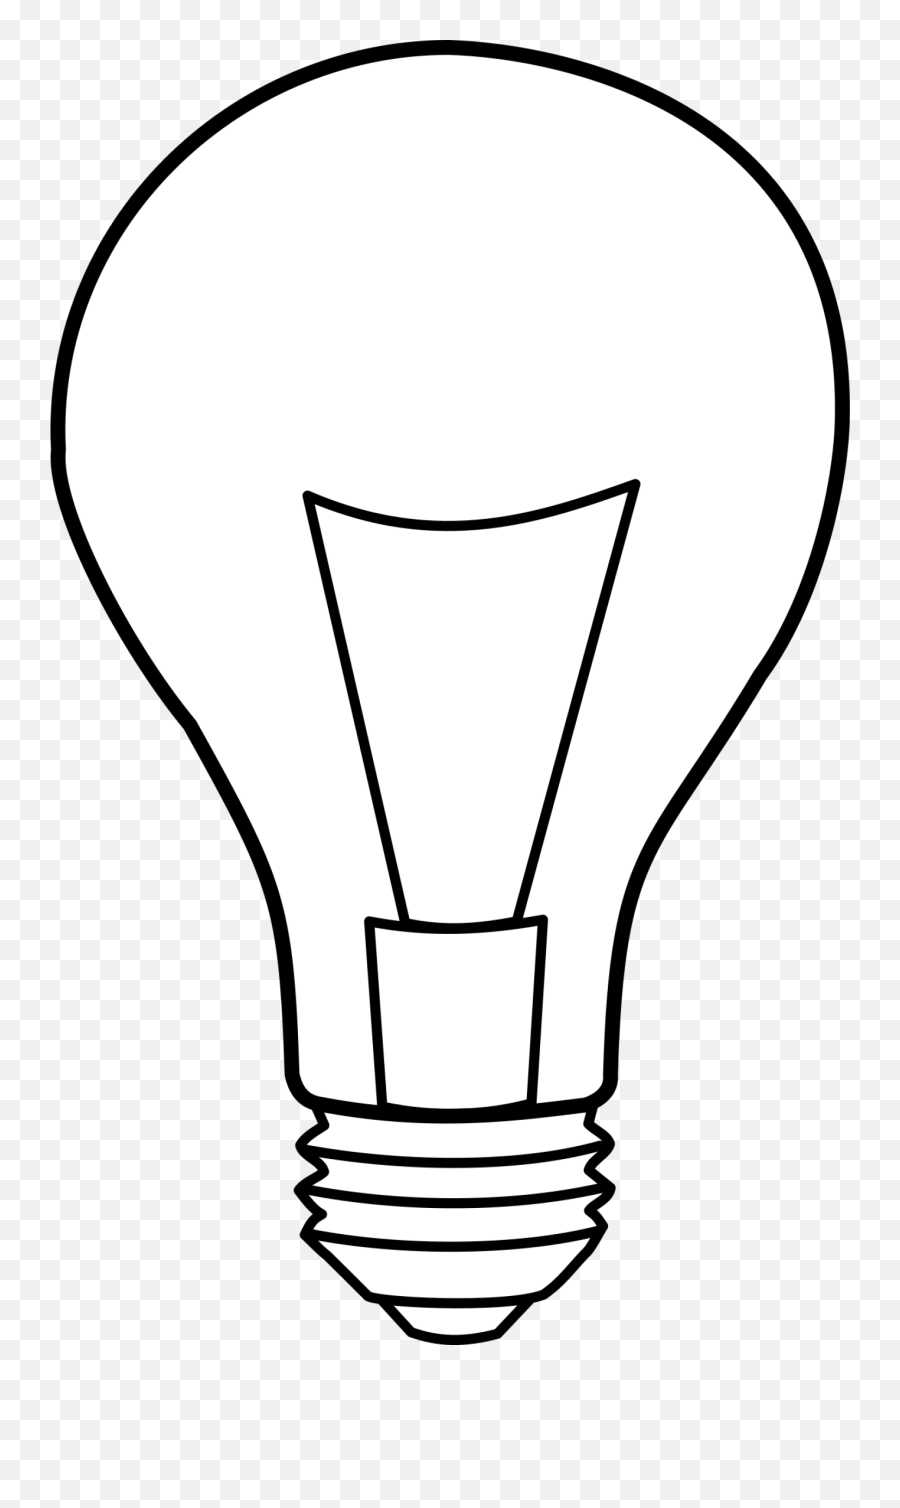 Light Bulb Clip Art Png Clipart Panda - Free Clipart Images Light Bulb Clipart Black And White,Light Bulb Png